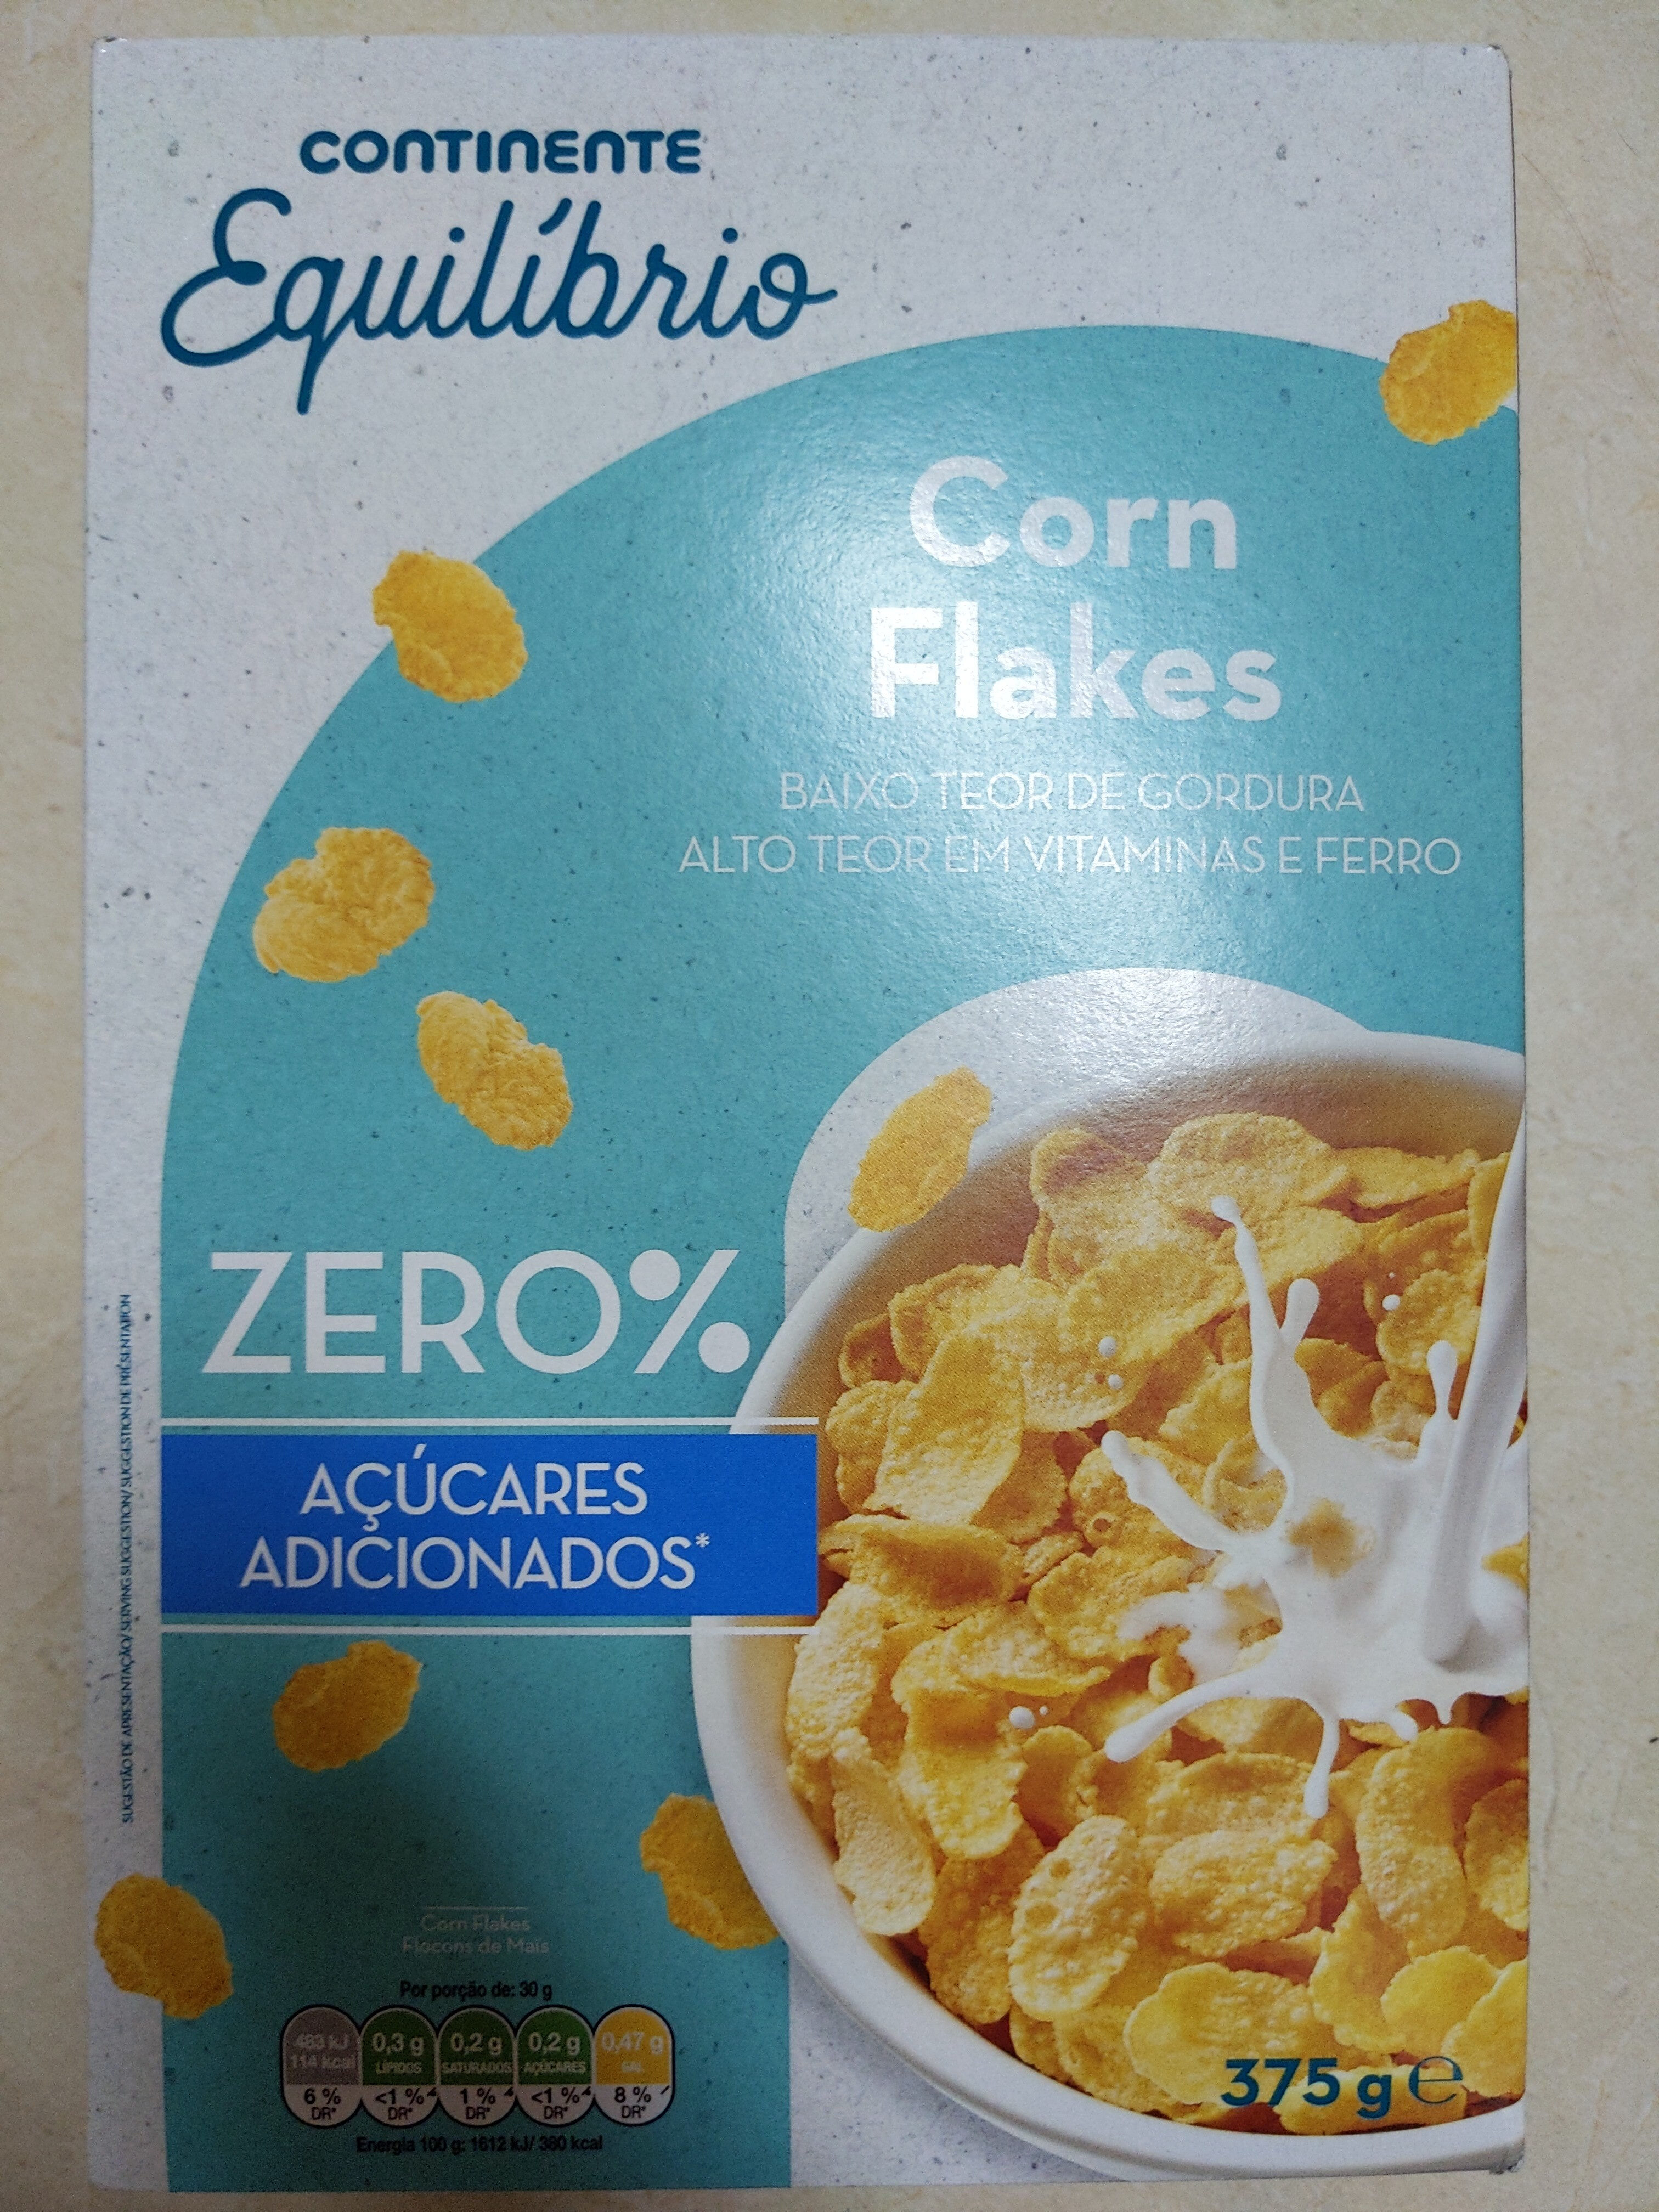 Corn flakes - Produkt - en